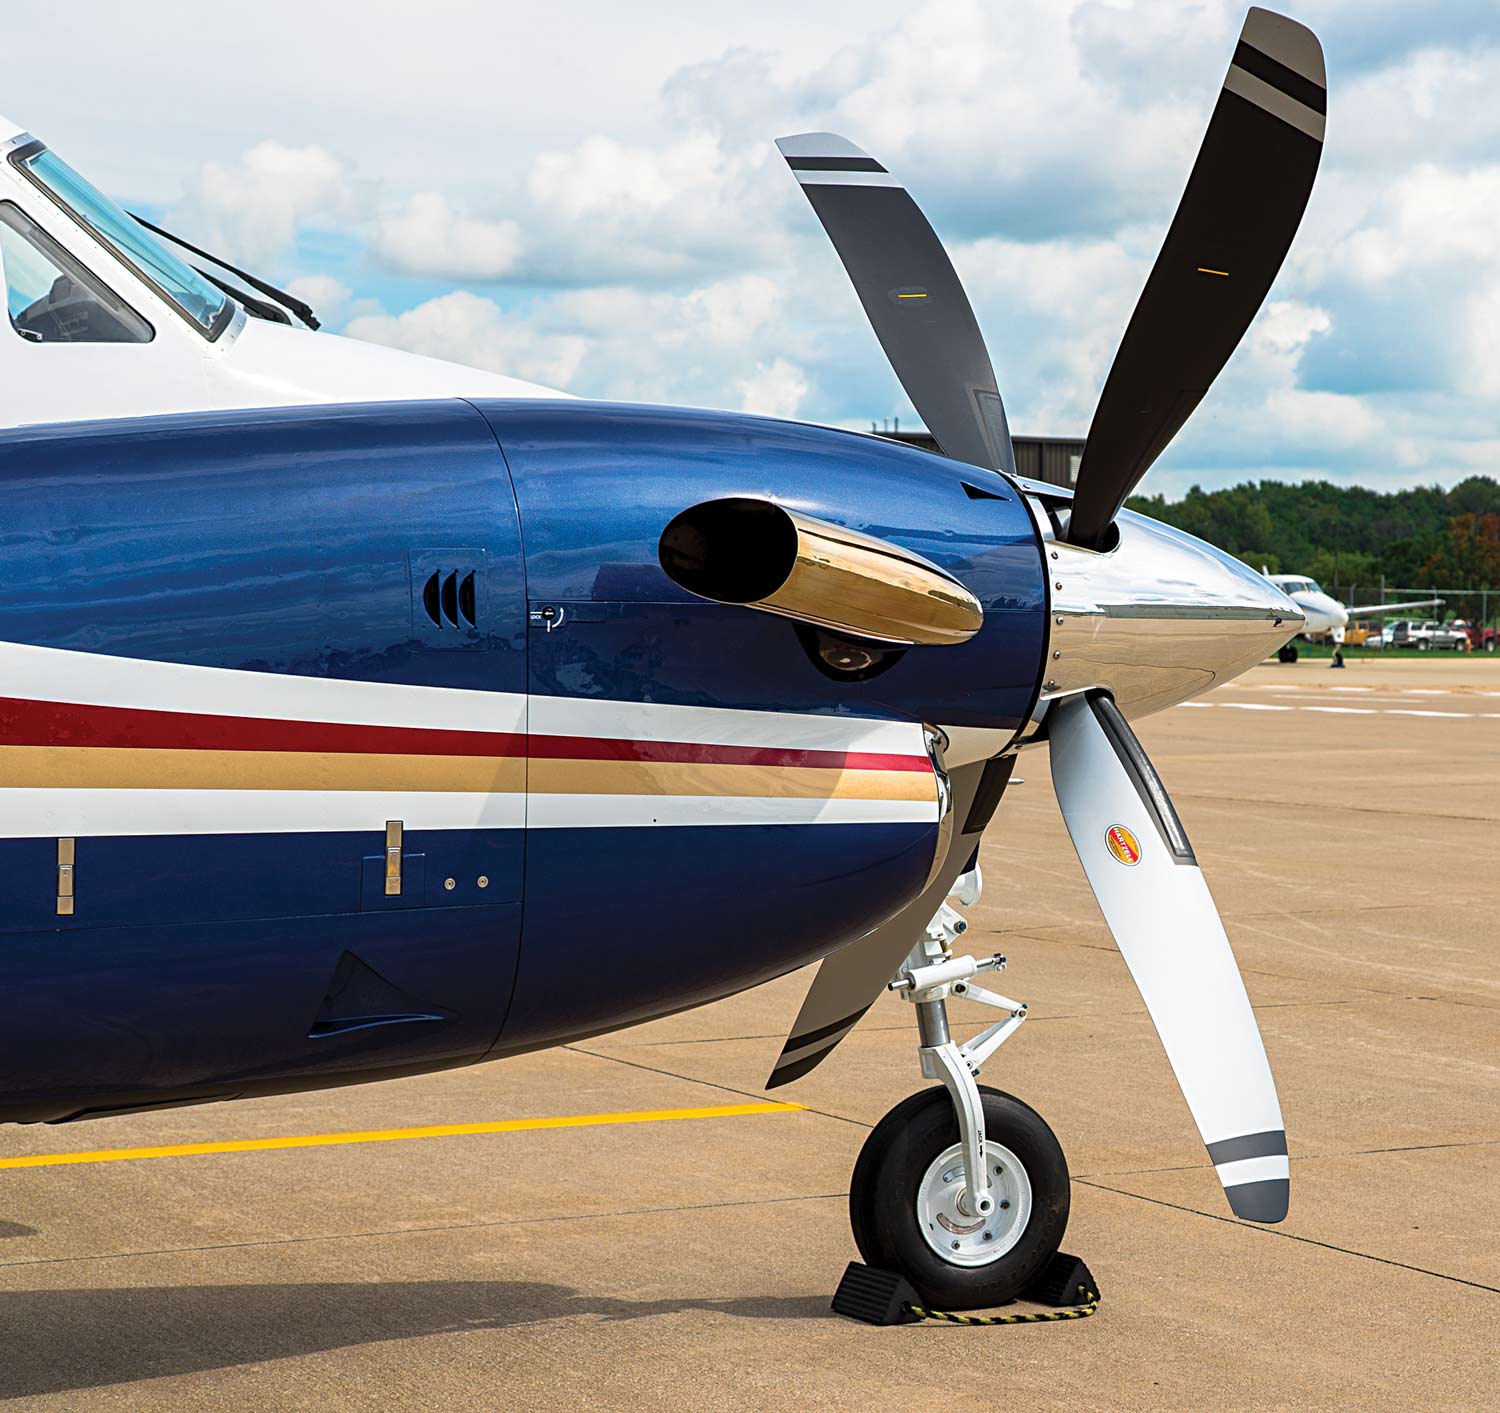 Raisbeck aircraft propeller upgrade